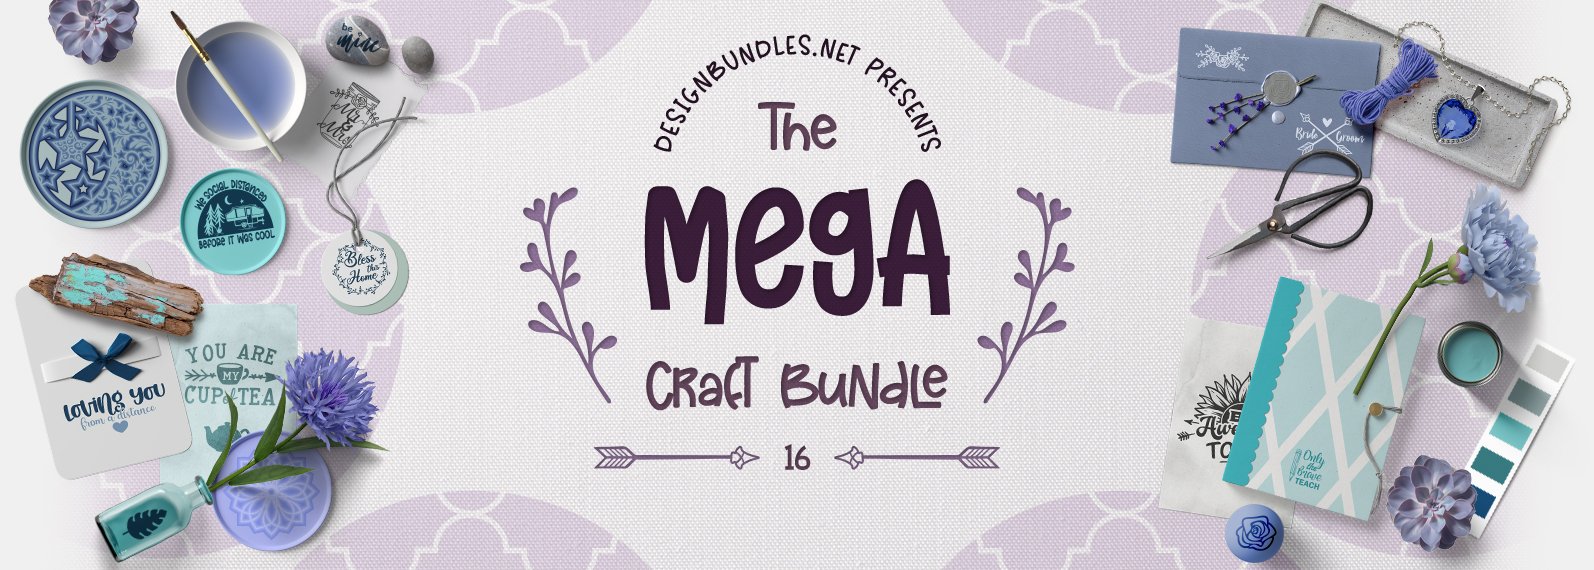 Download The Mega Craft Bundle 16 | DesignBundles